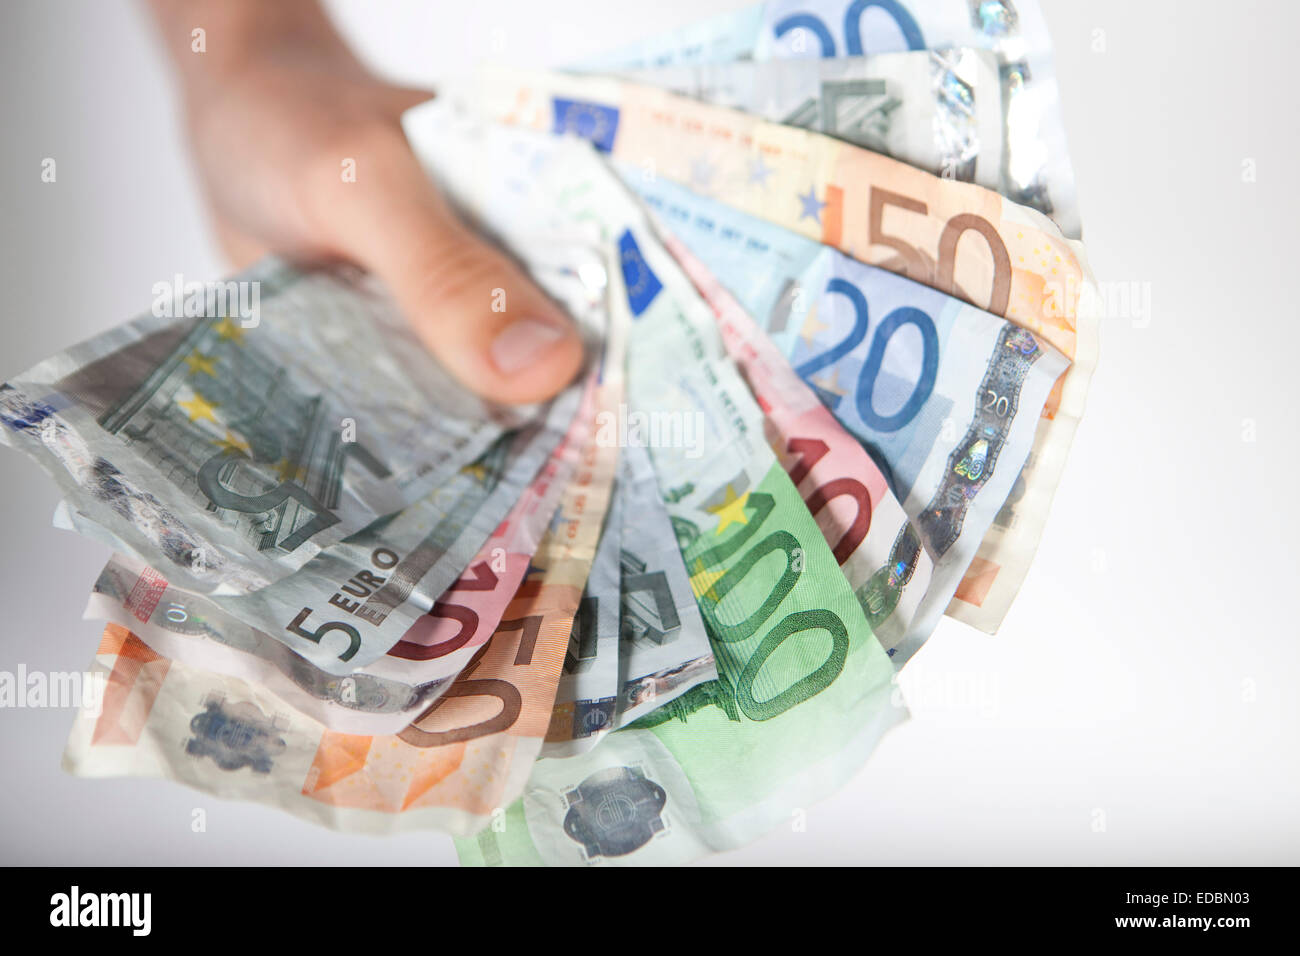 Illustrative image of various denomination Euro notes. Stock Photo